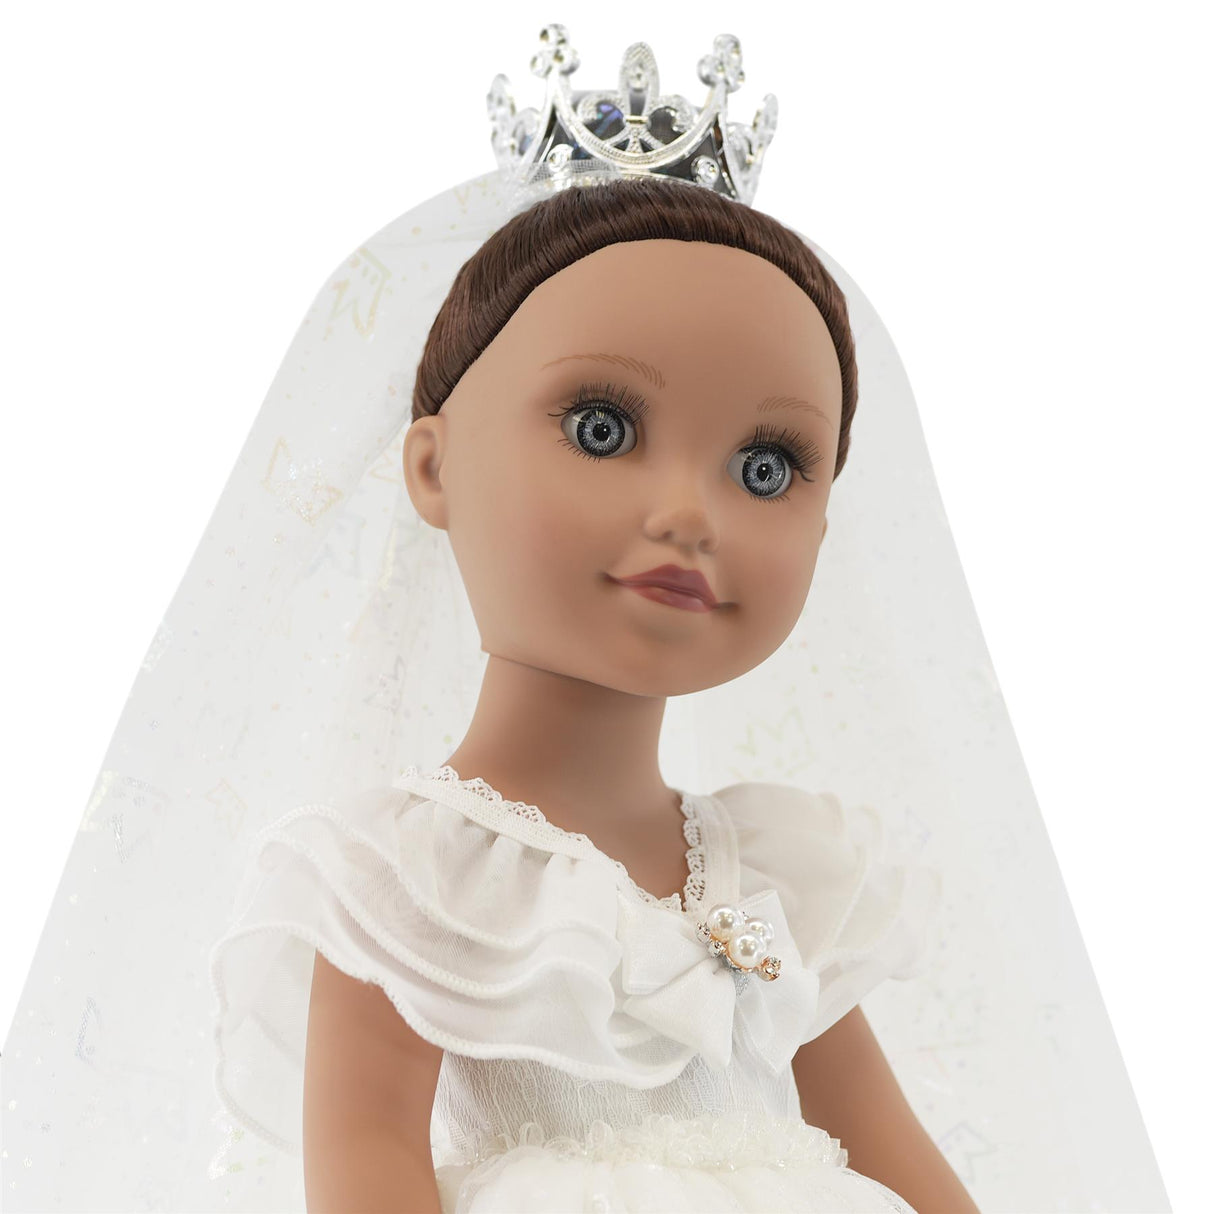 BiBI Fashion Doll "BRIDE LILY" (47 cm / 18") by BiBi Doll - UKBuyZone